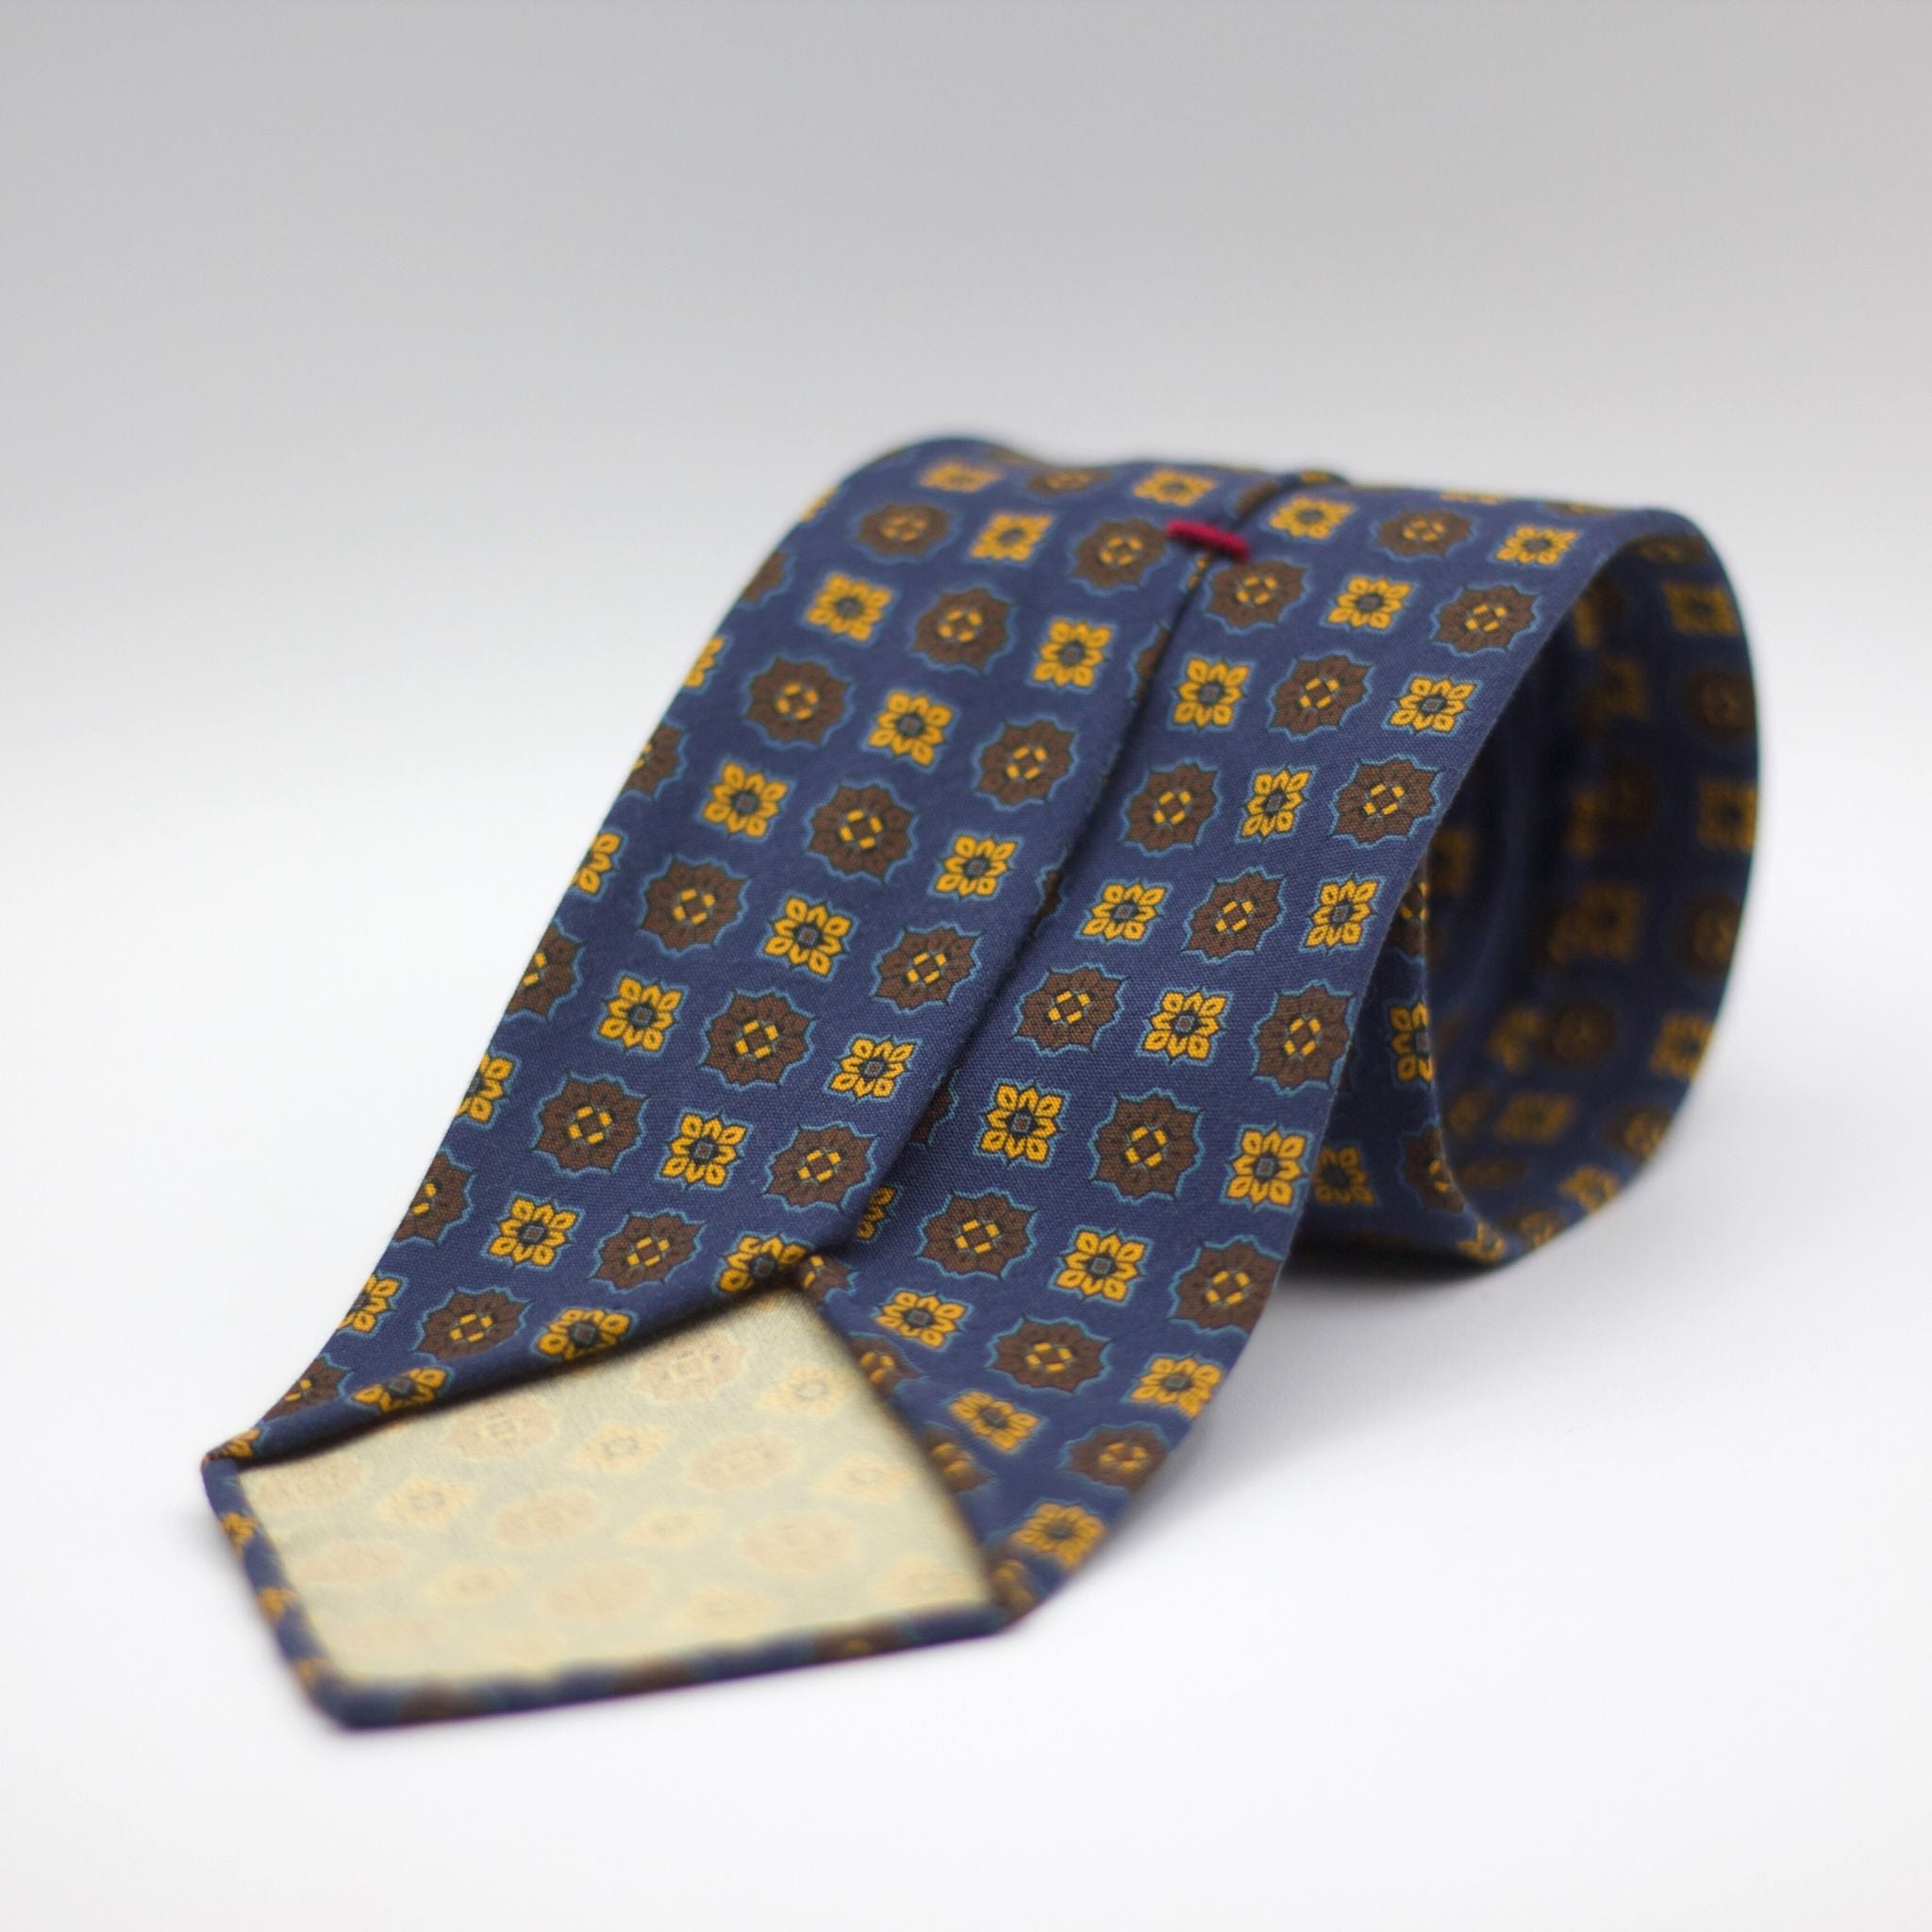 Cruciani & Bella  100% Printed Madder Silk  Italian fabric  Unlined tie Blue, Yellow and Brown motif 8 cm x 150 cm